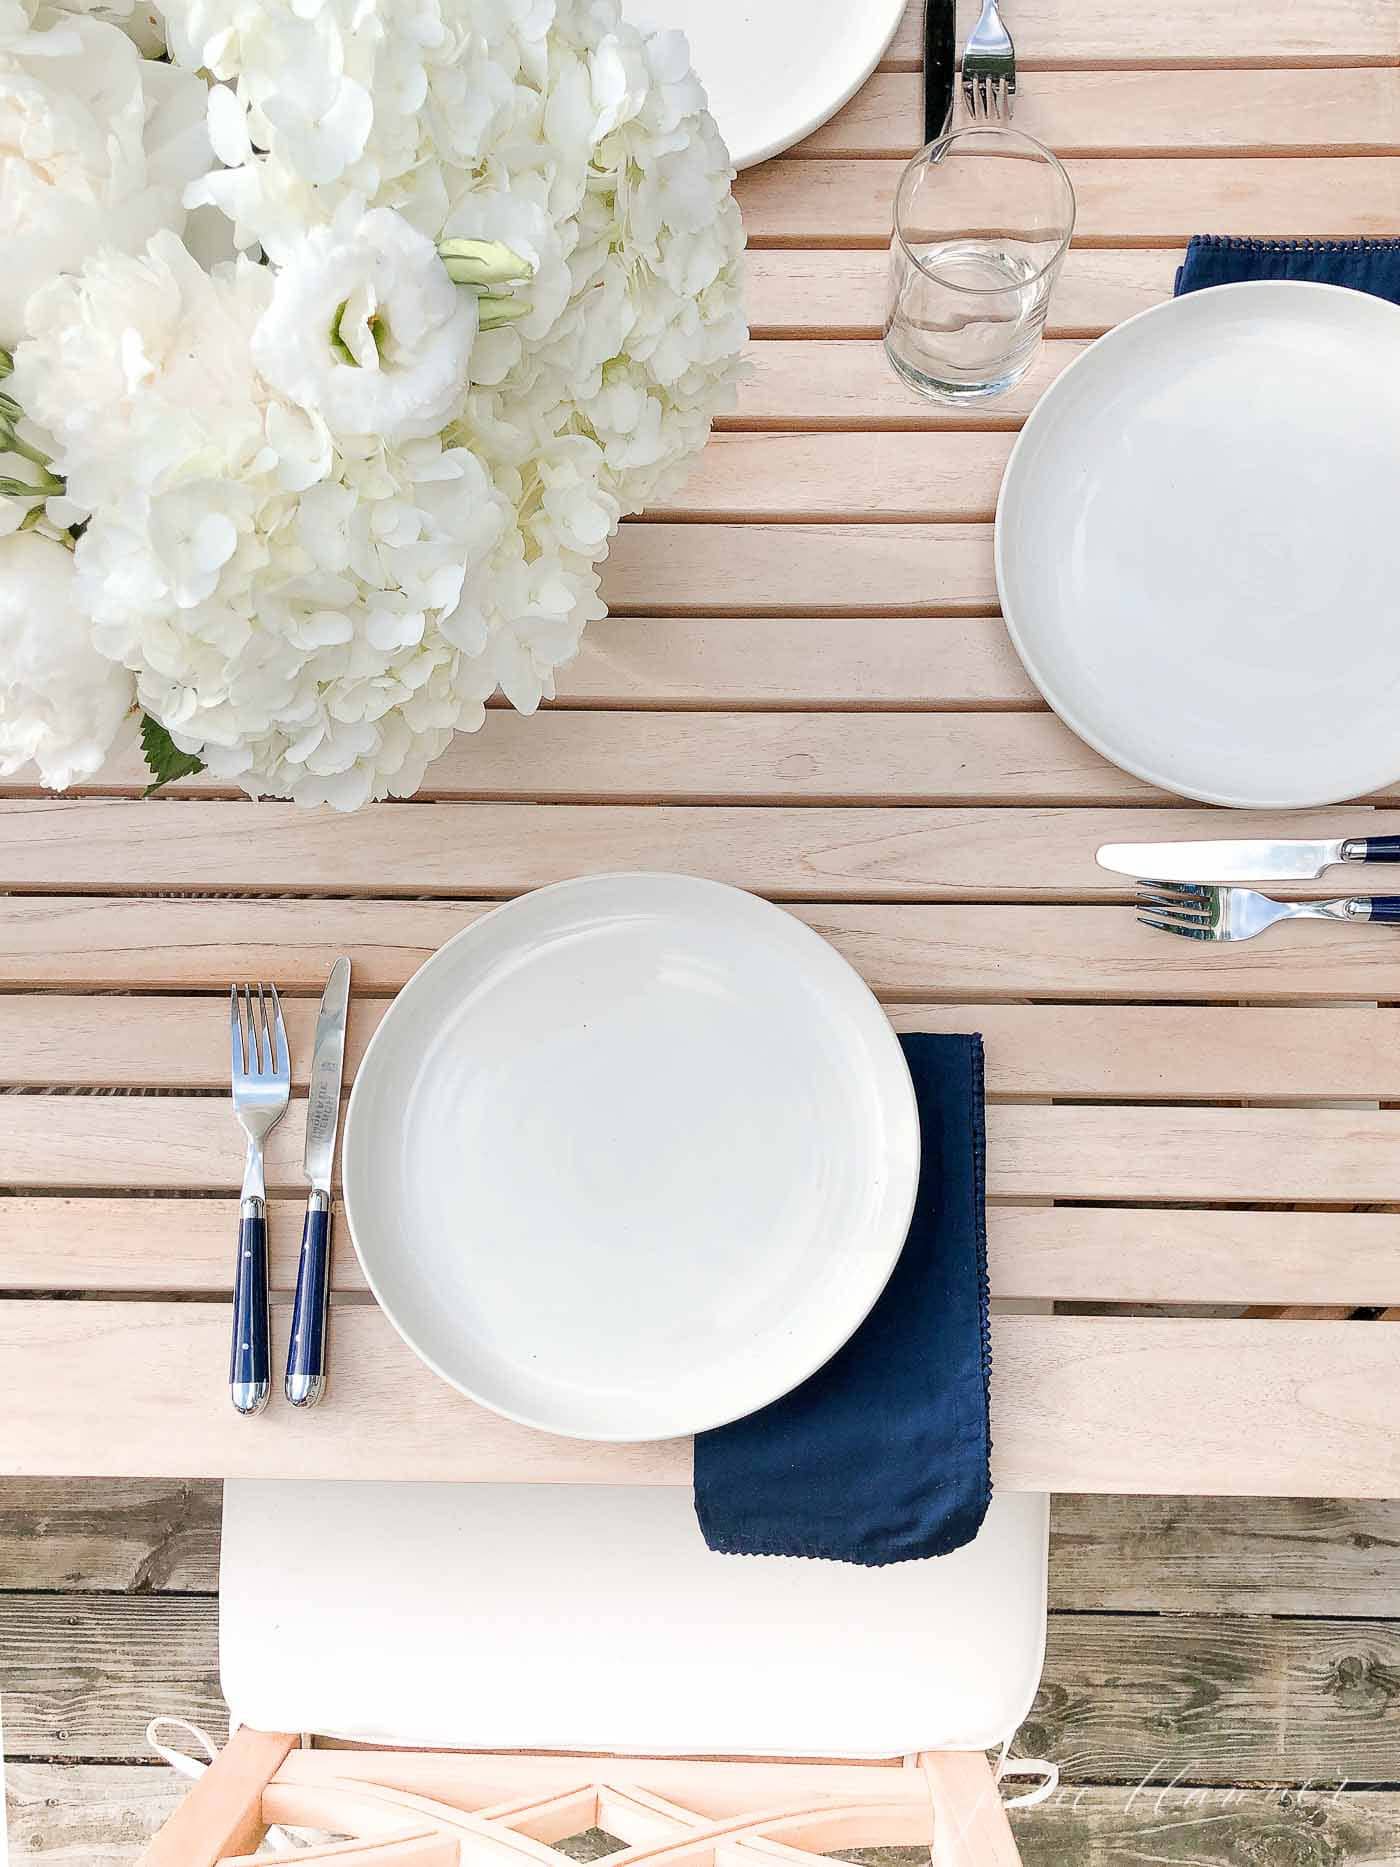 white hydrangea centerpiece on a teak table outdoors.